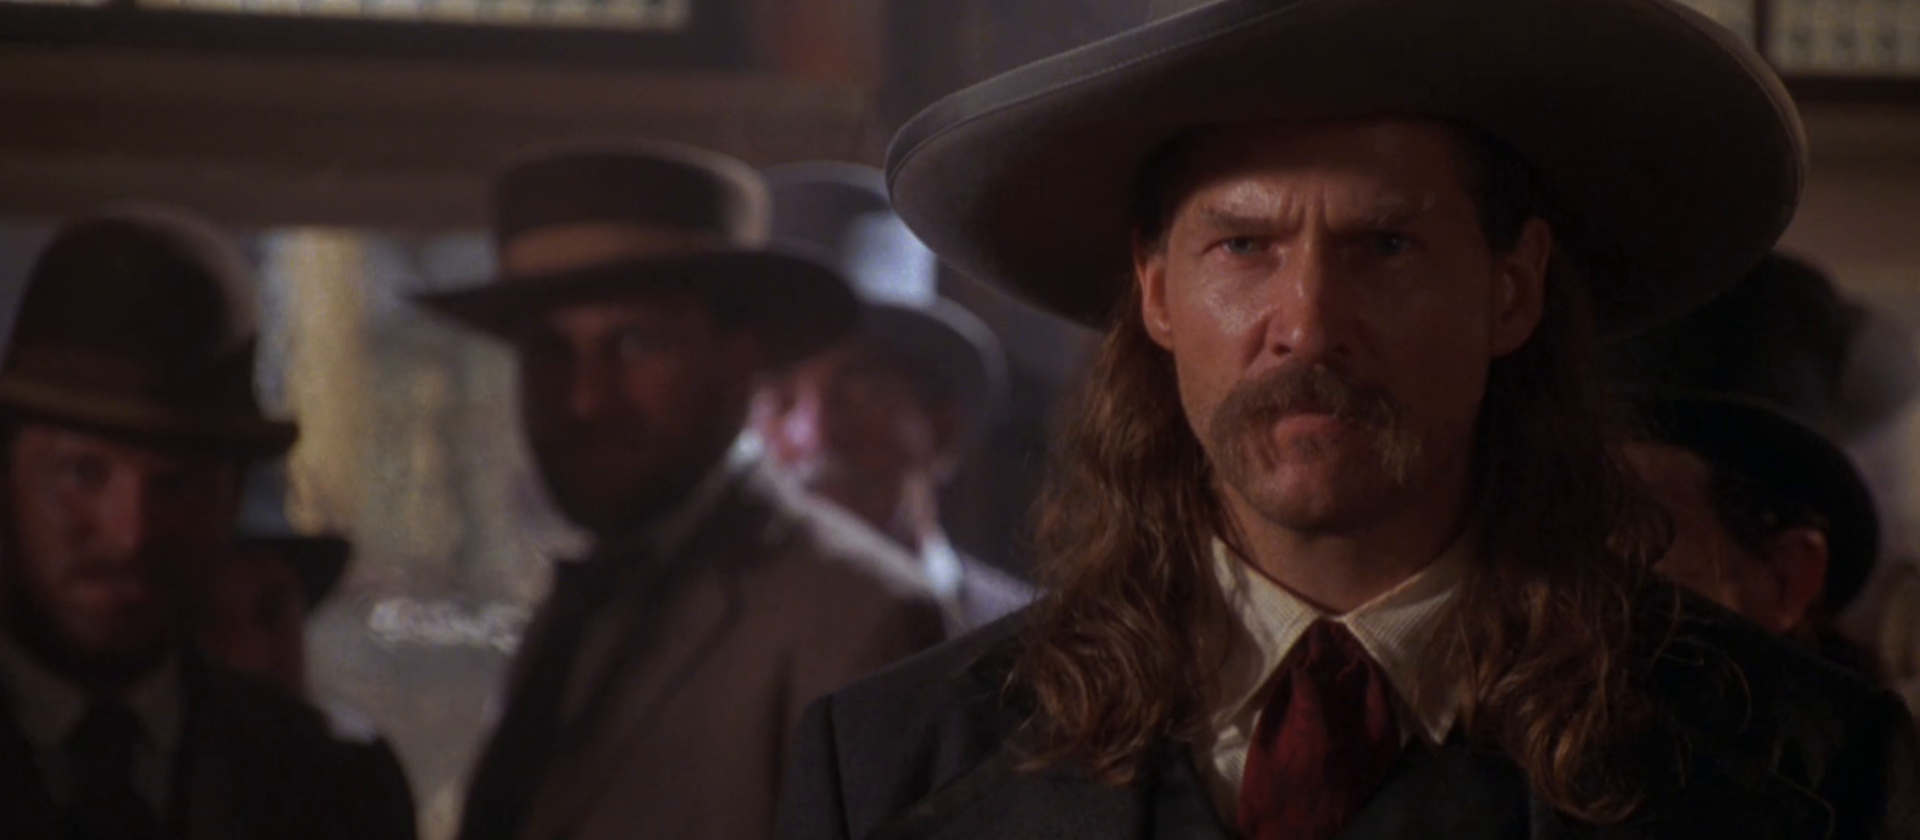 Jeff Bridges as Wild Bill Hickock